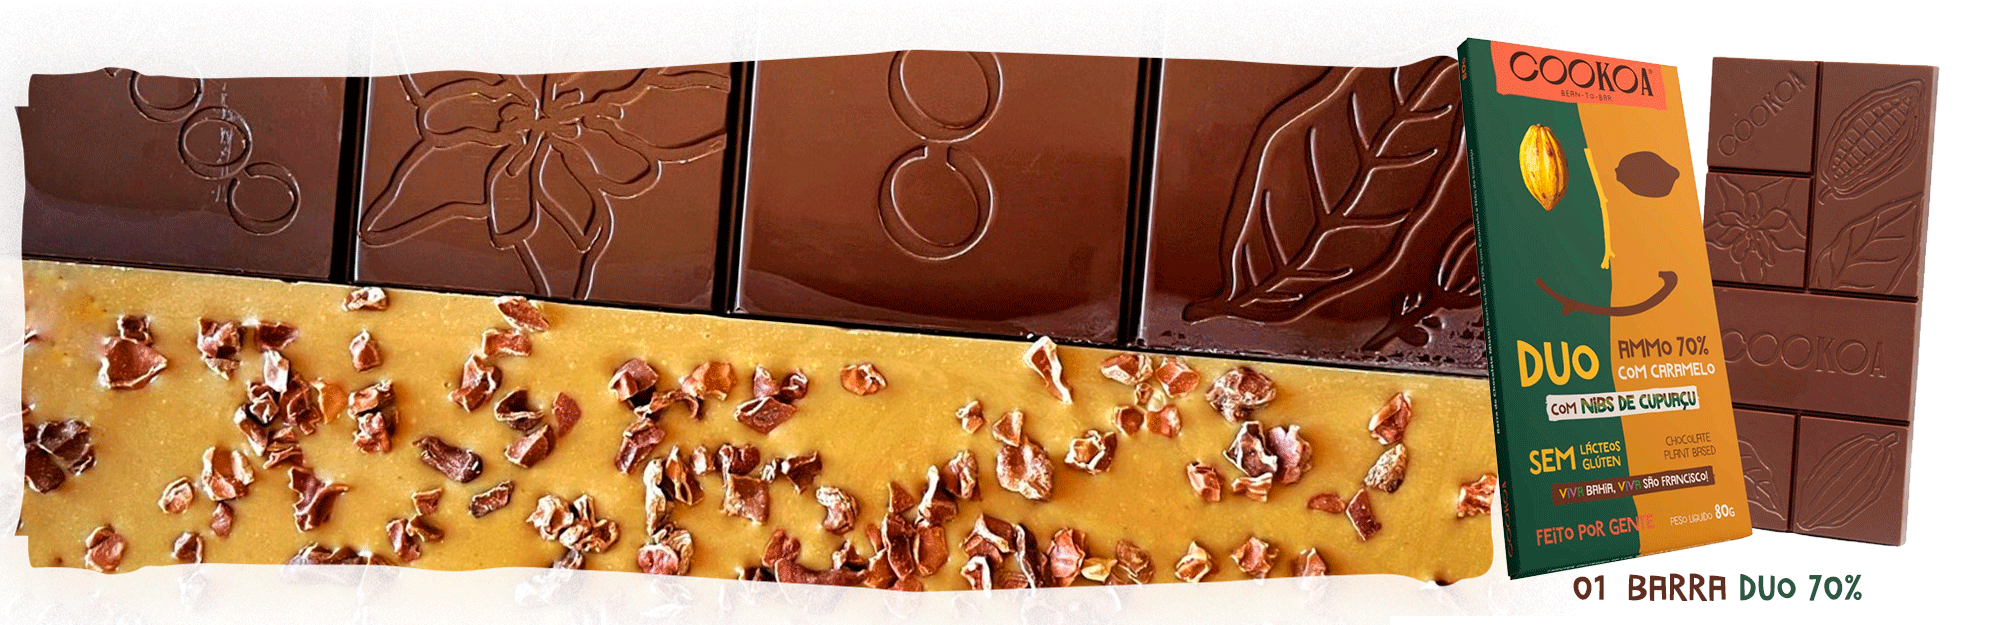 kit com aucar chocolate duo cookoa